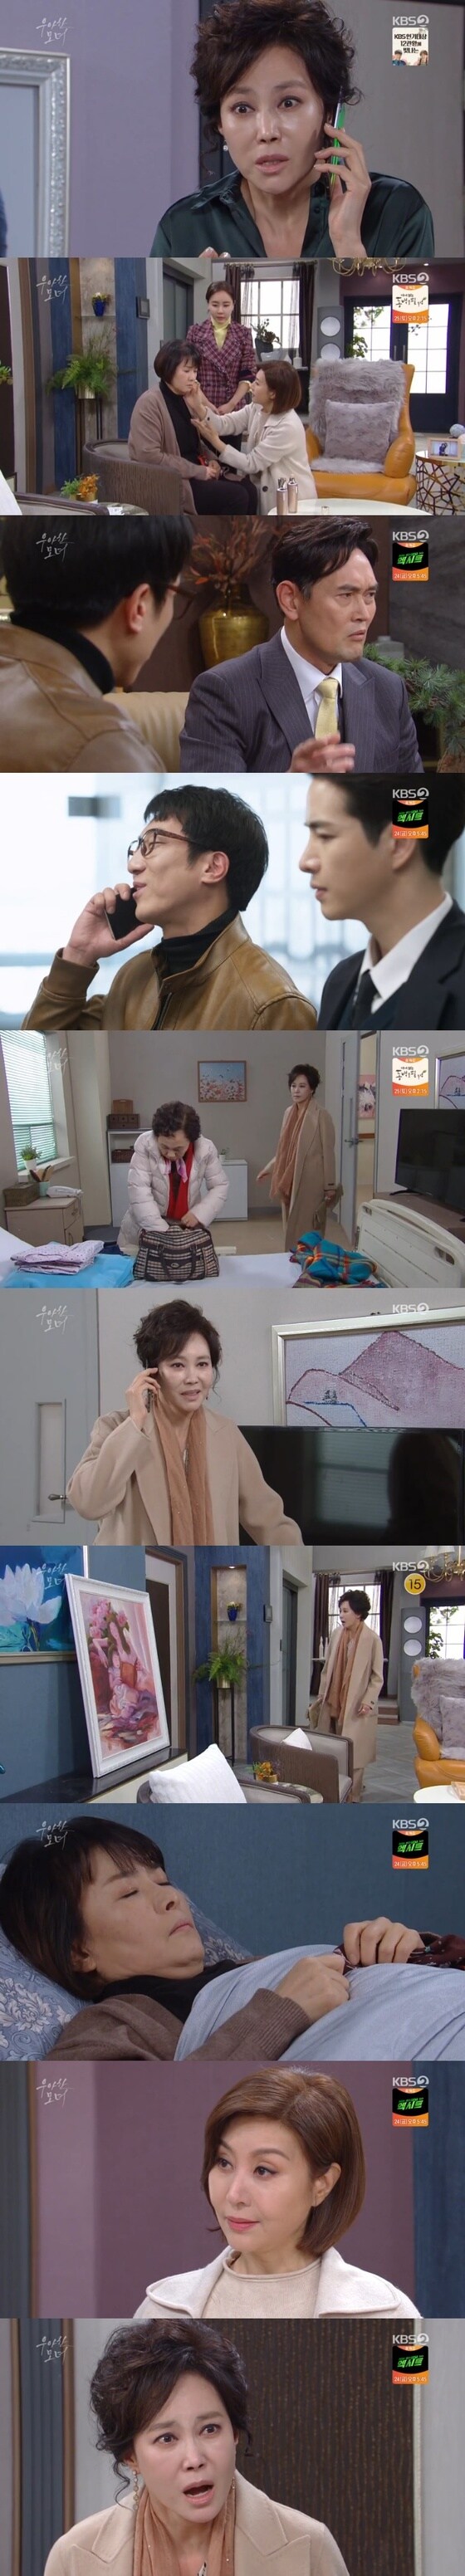 KBS 2TV '우아한 모녀' 캡처 © 뉴스1